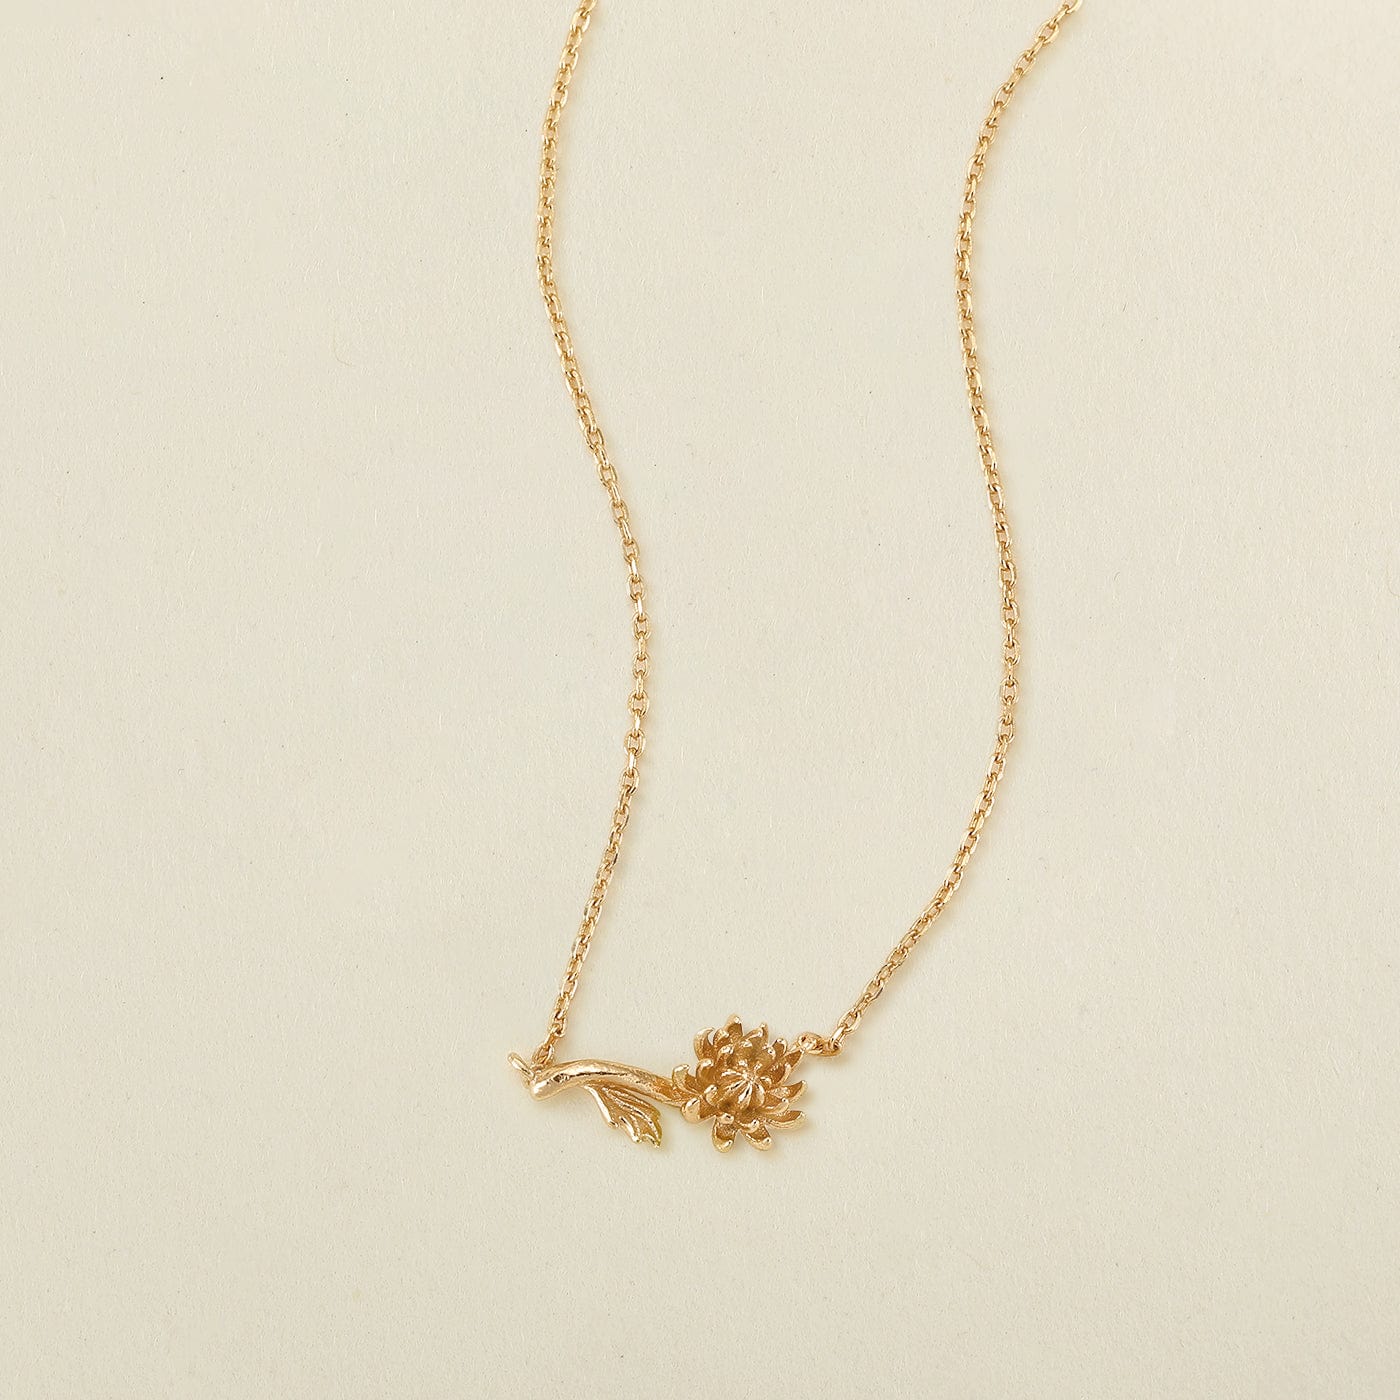 November Everbloom Birth Flower Necklace Gold Vermeil Necklace